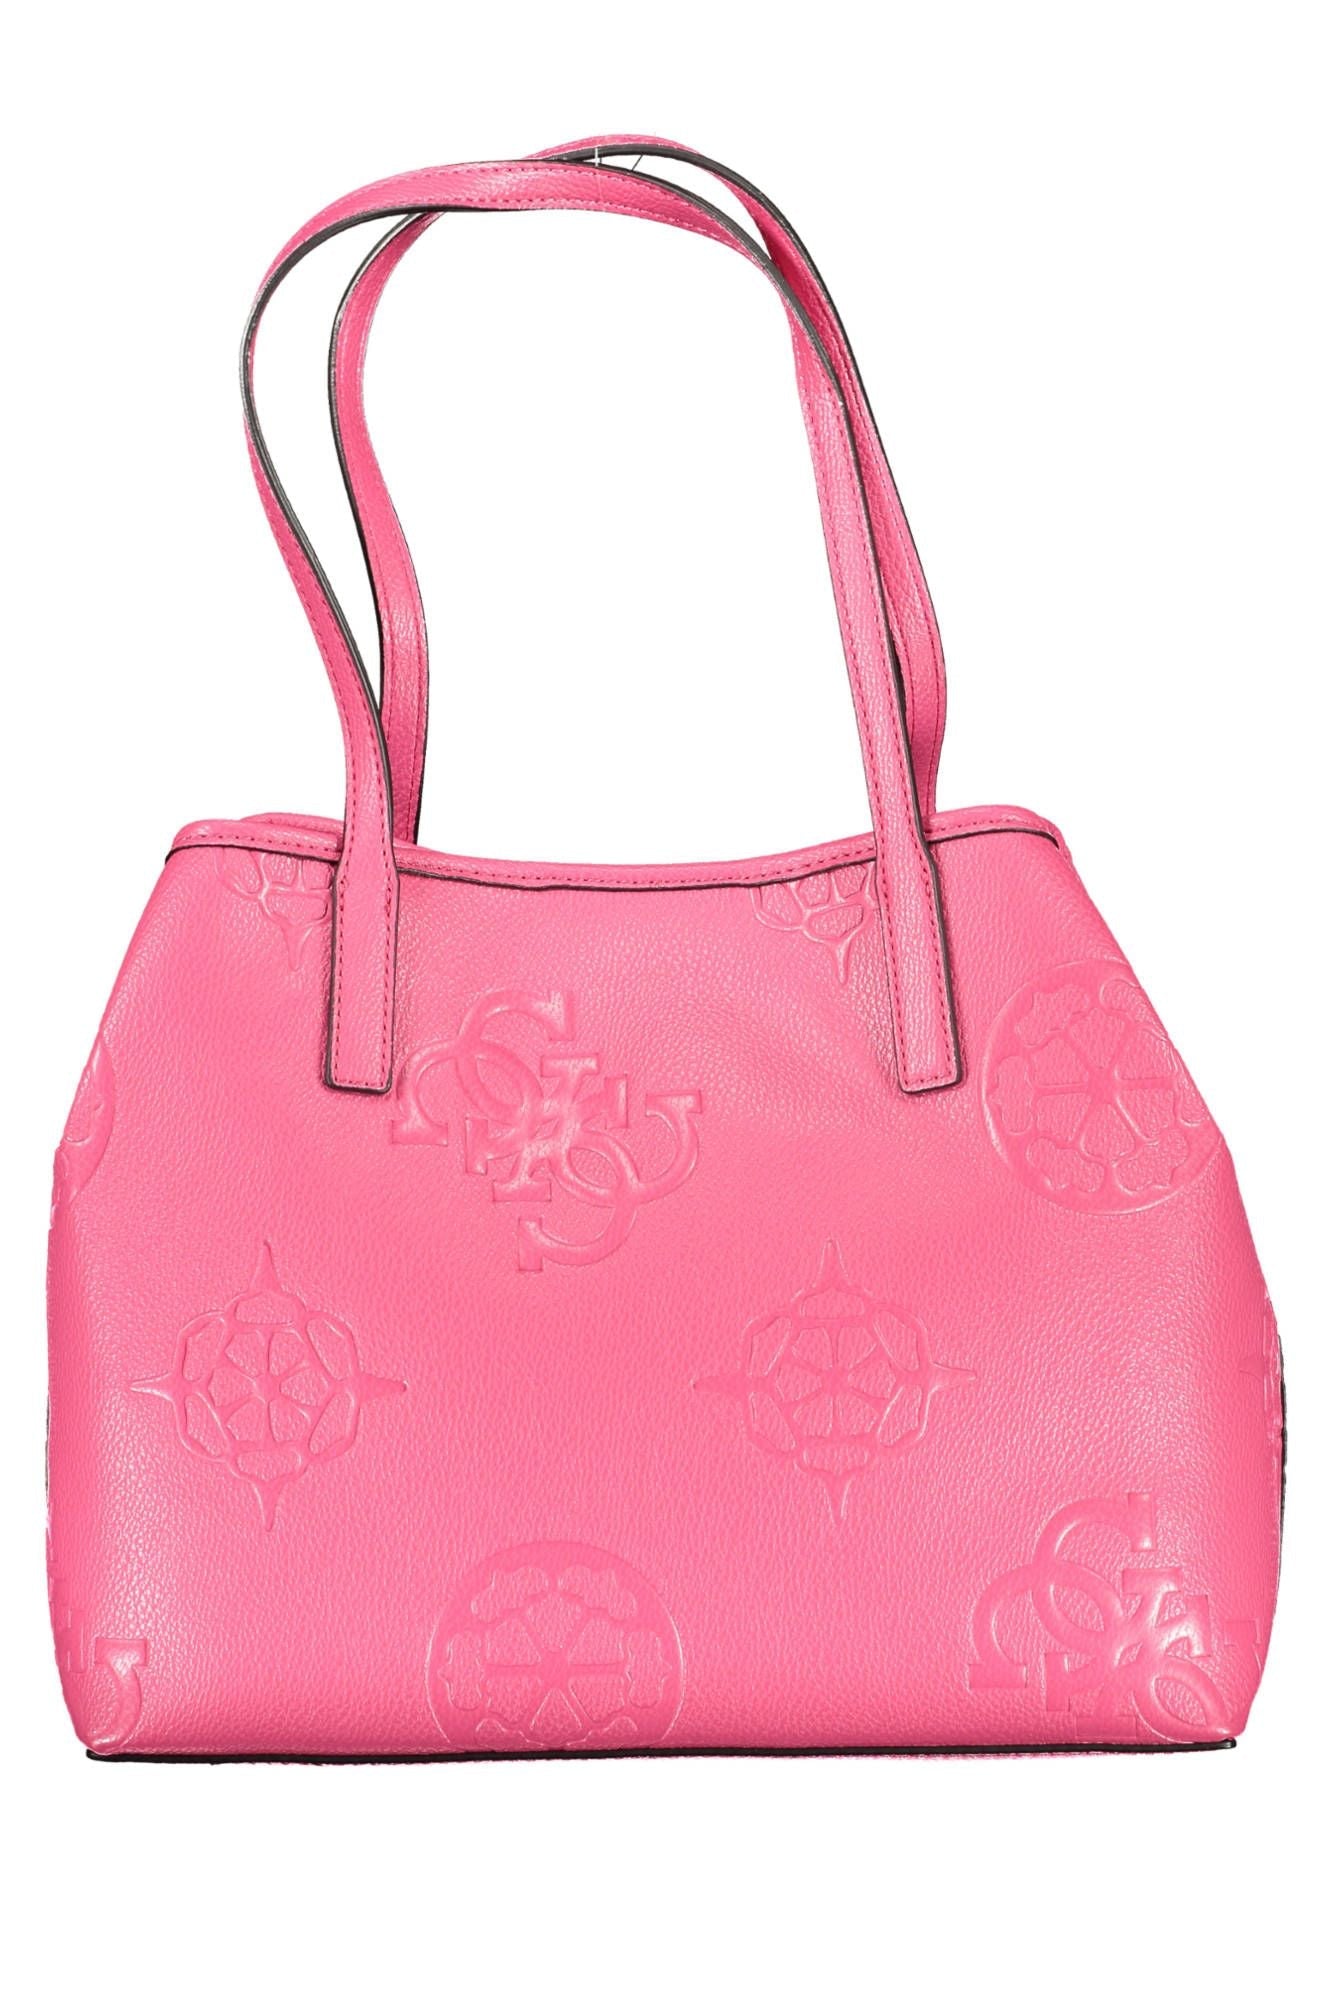 Guess Jeans Pink Polyurethane Handbag